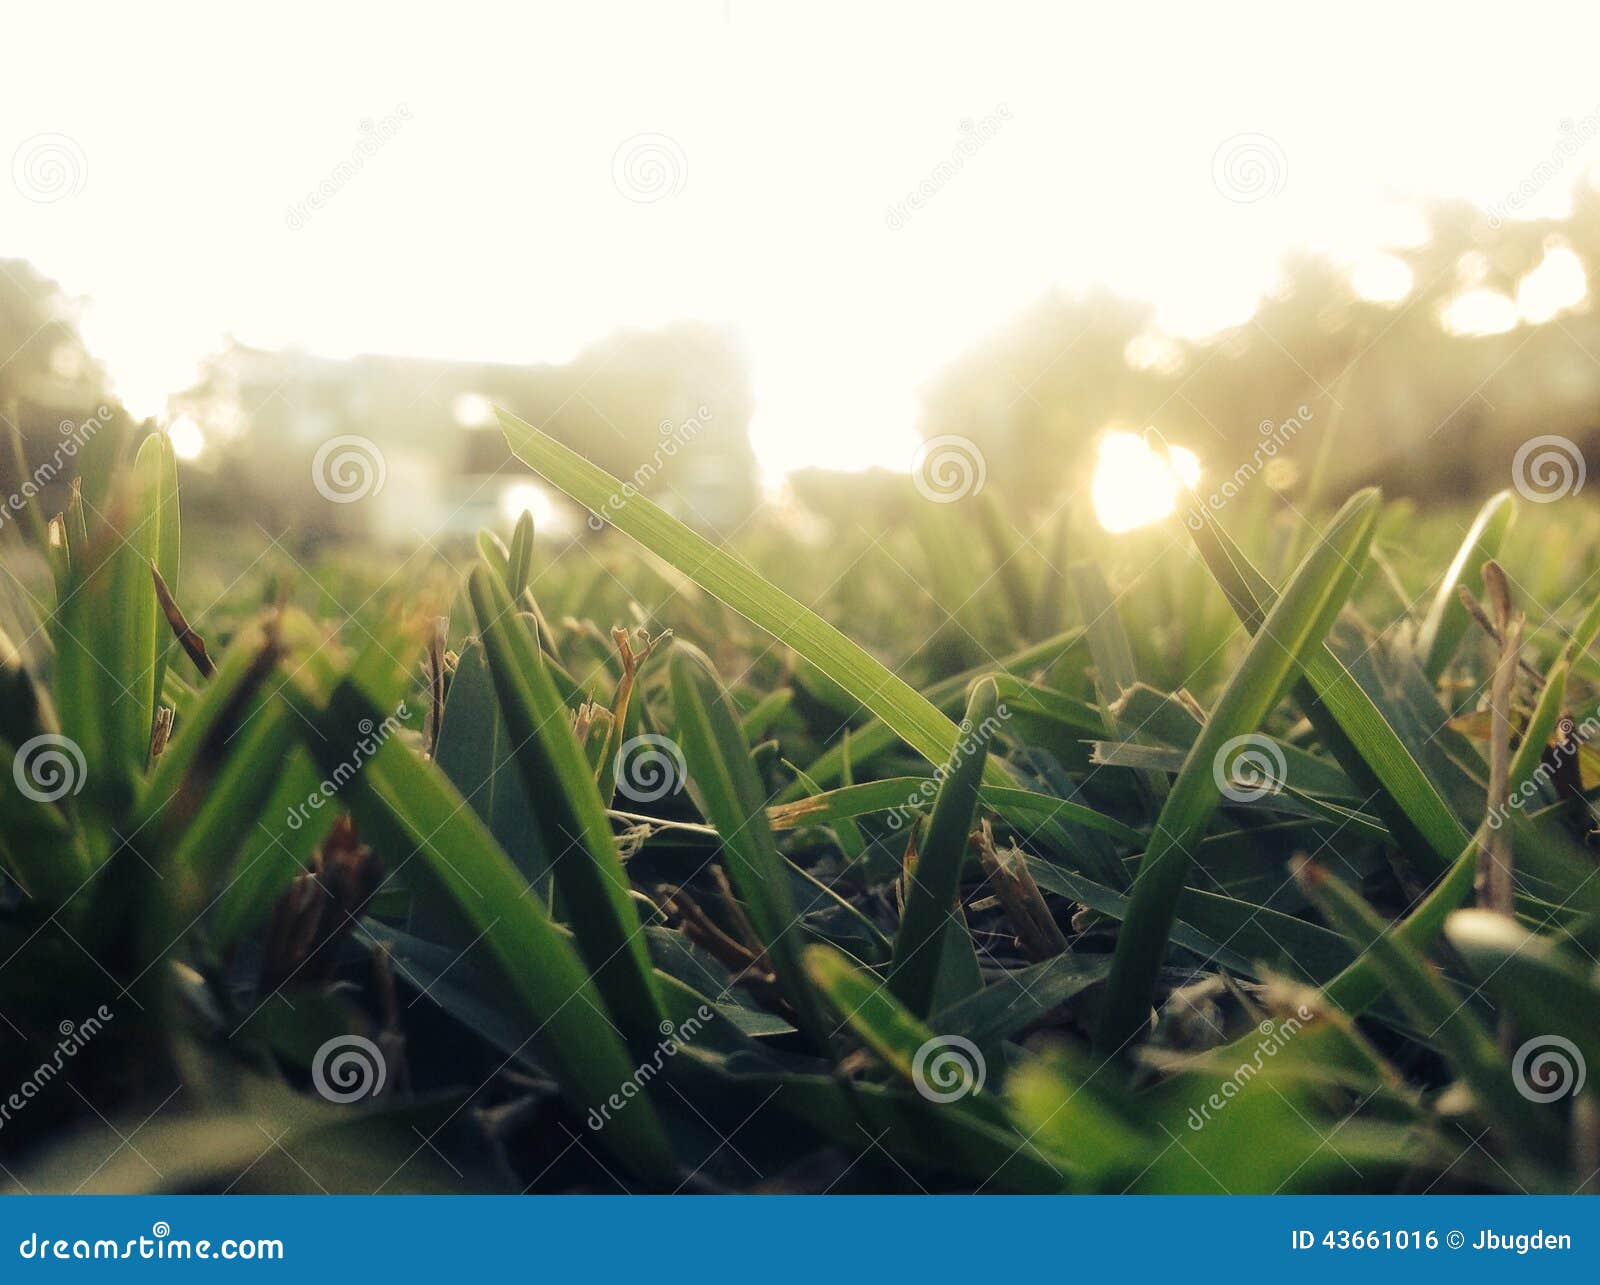 Sunlit Grass stock photo. Image of morning, ground, grass - 43661016